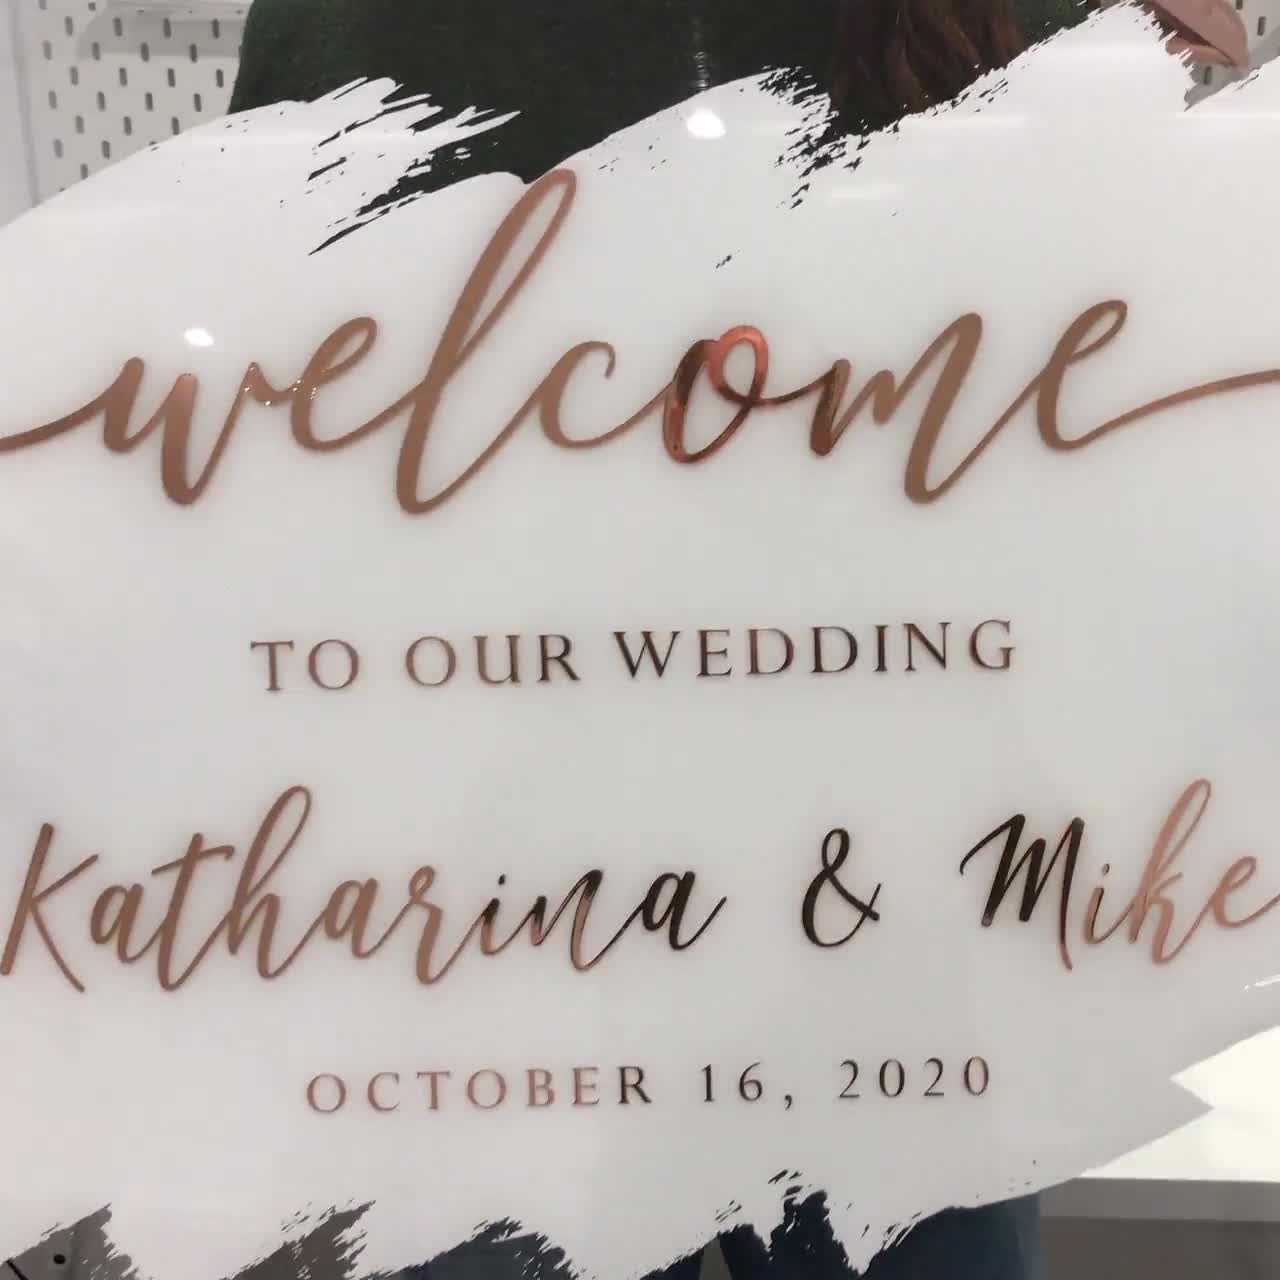 Cartel de bienvenida translúcido texto negro, entrada boda o evento  personalizado - Mumdragora